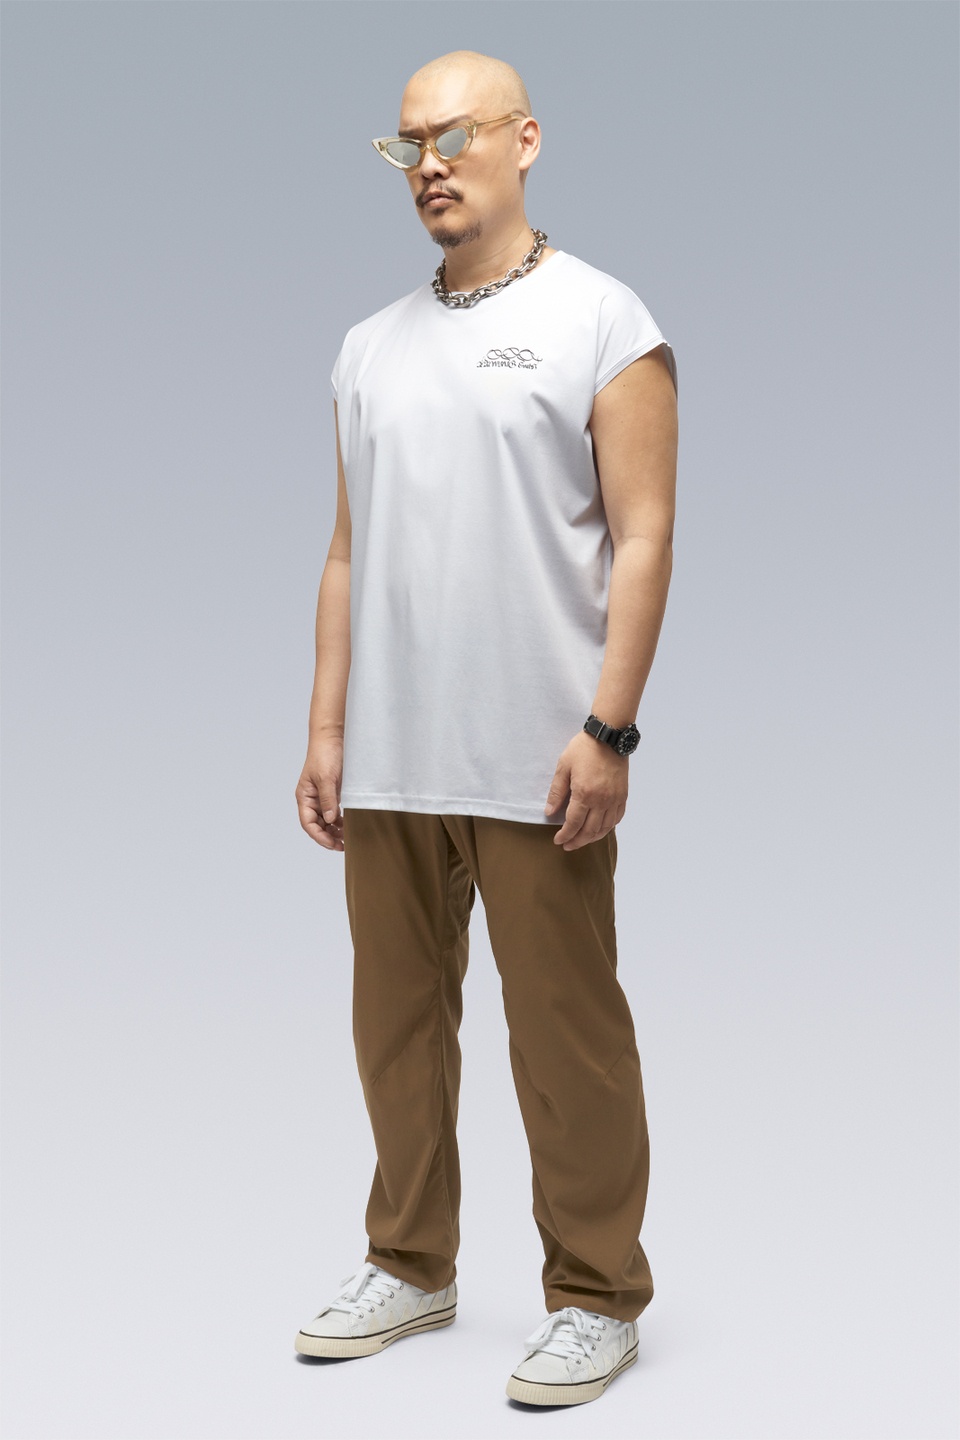 S25-PR-A 100% Cotton Mercerized Sleeveless T-shirt White - 6